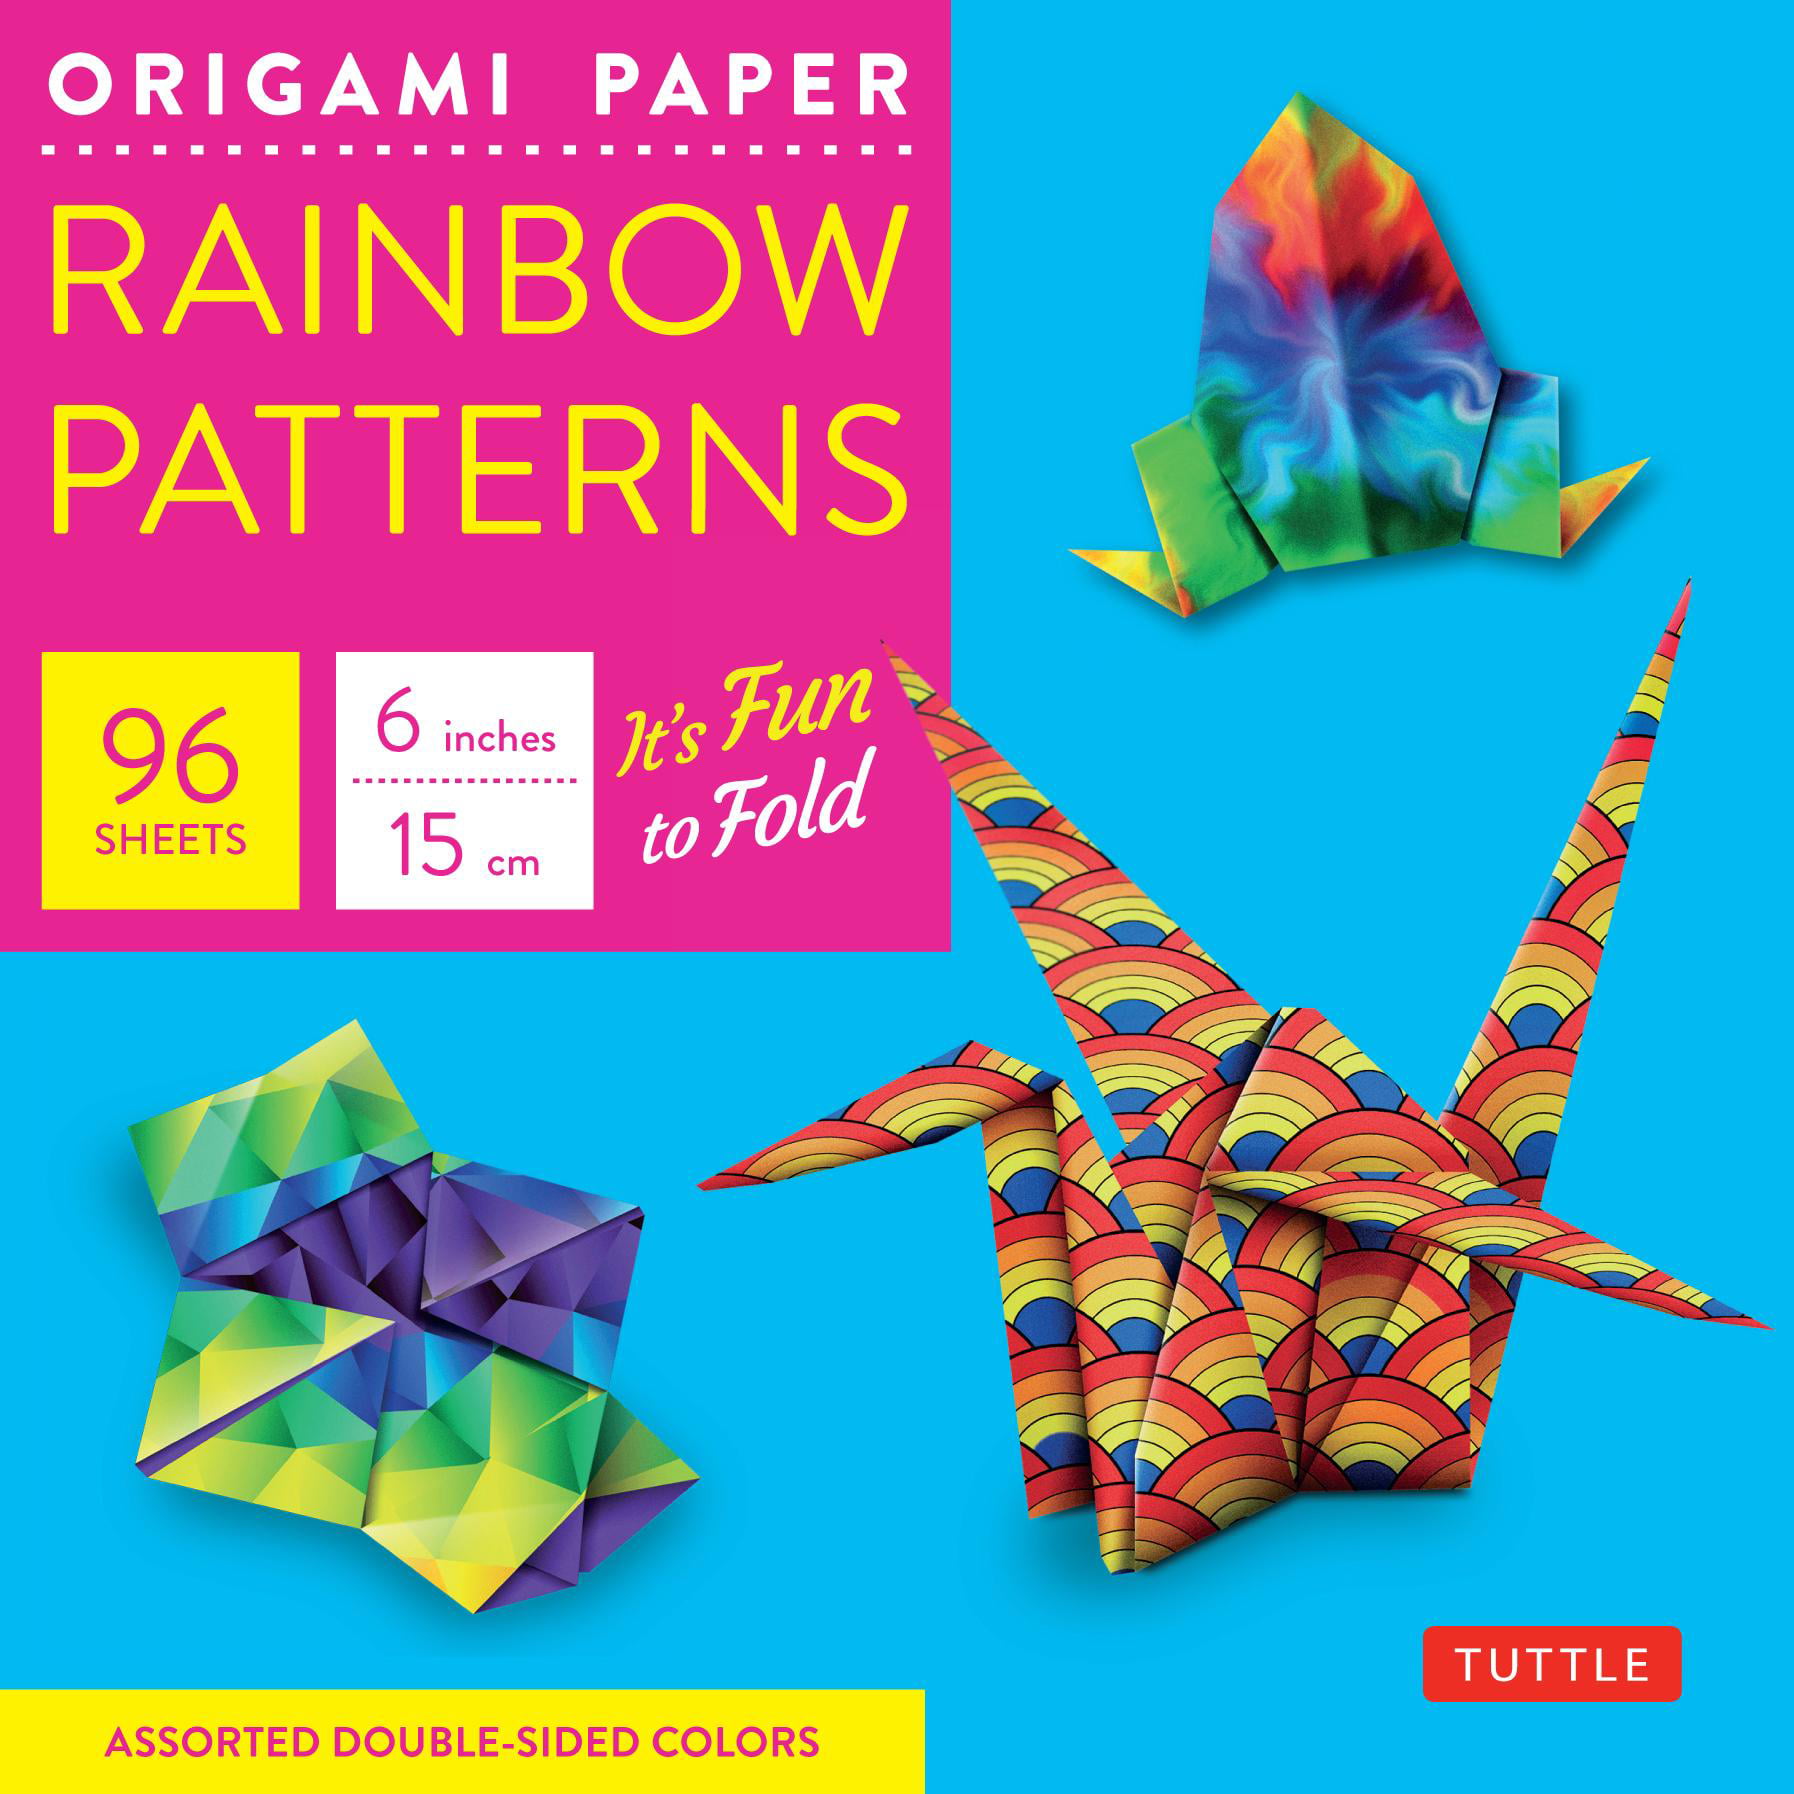 The Deluxe Origami Set 1,000 Cranes